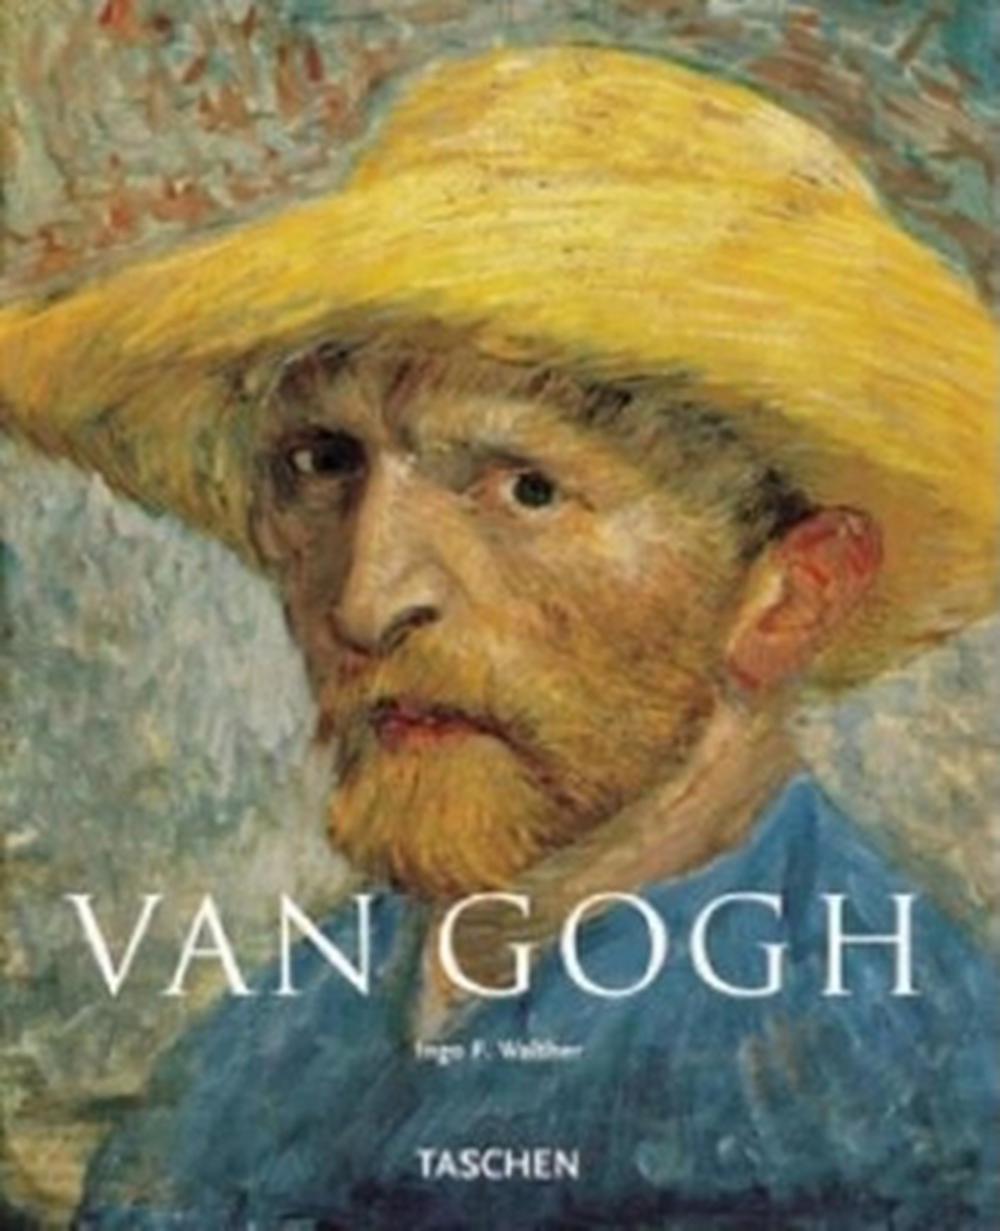 biography van gogh english